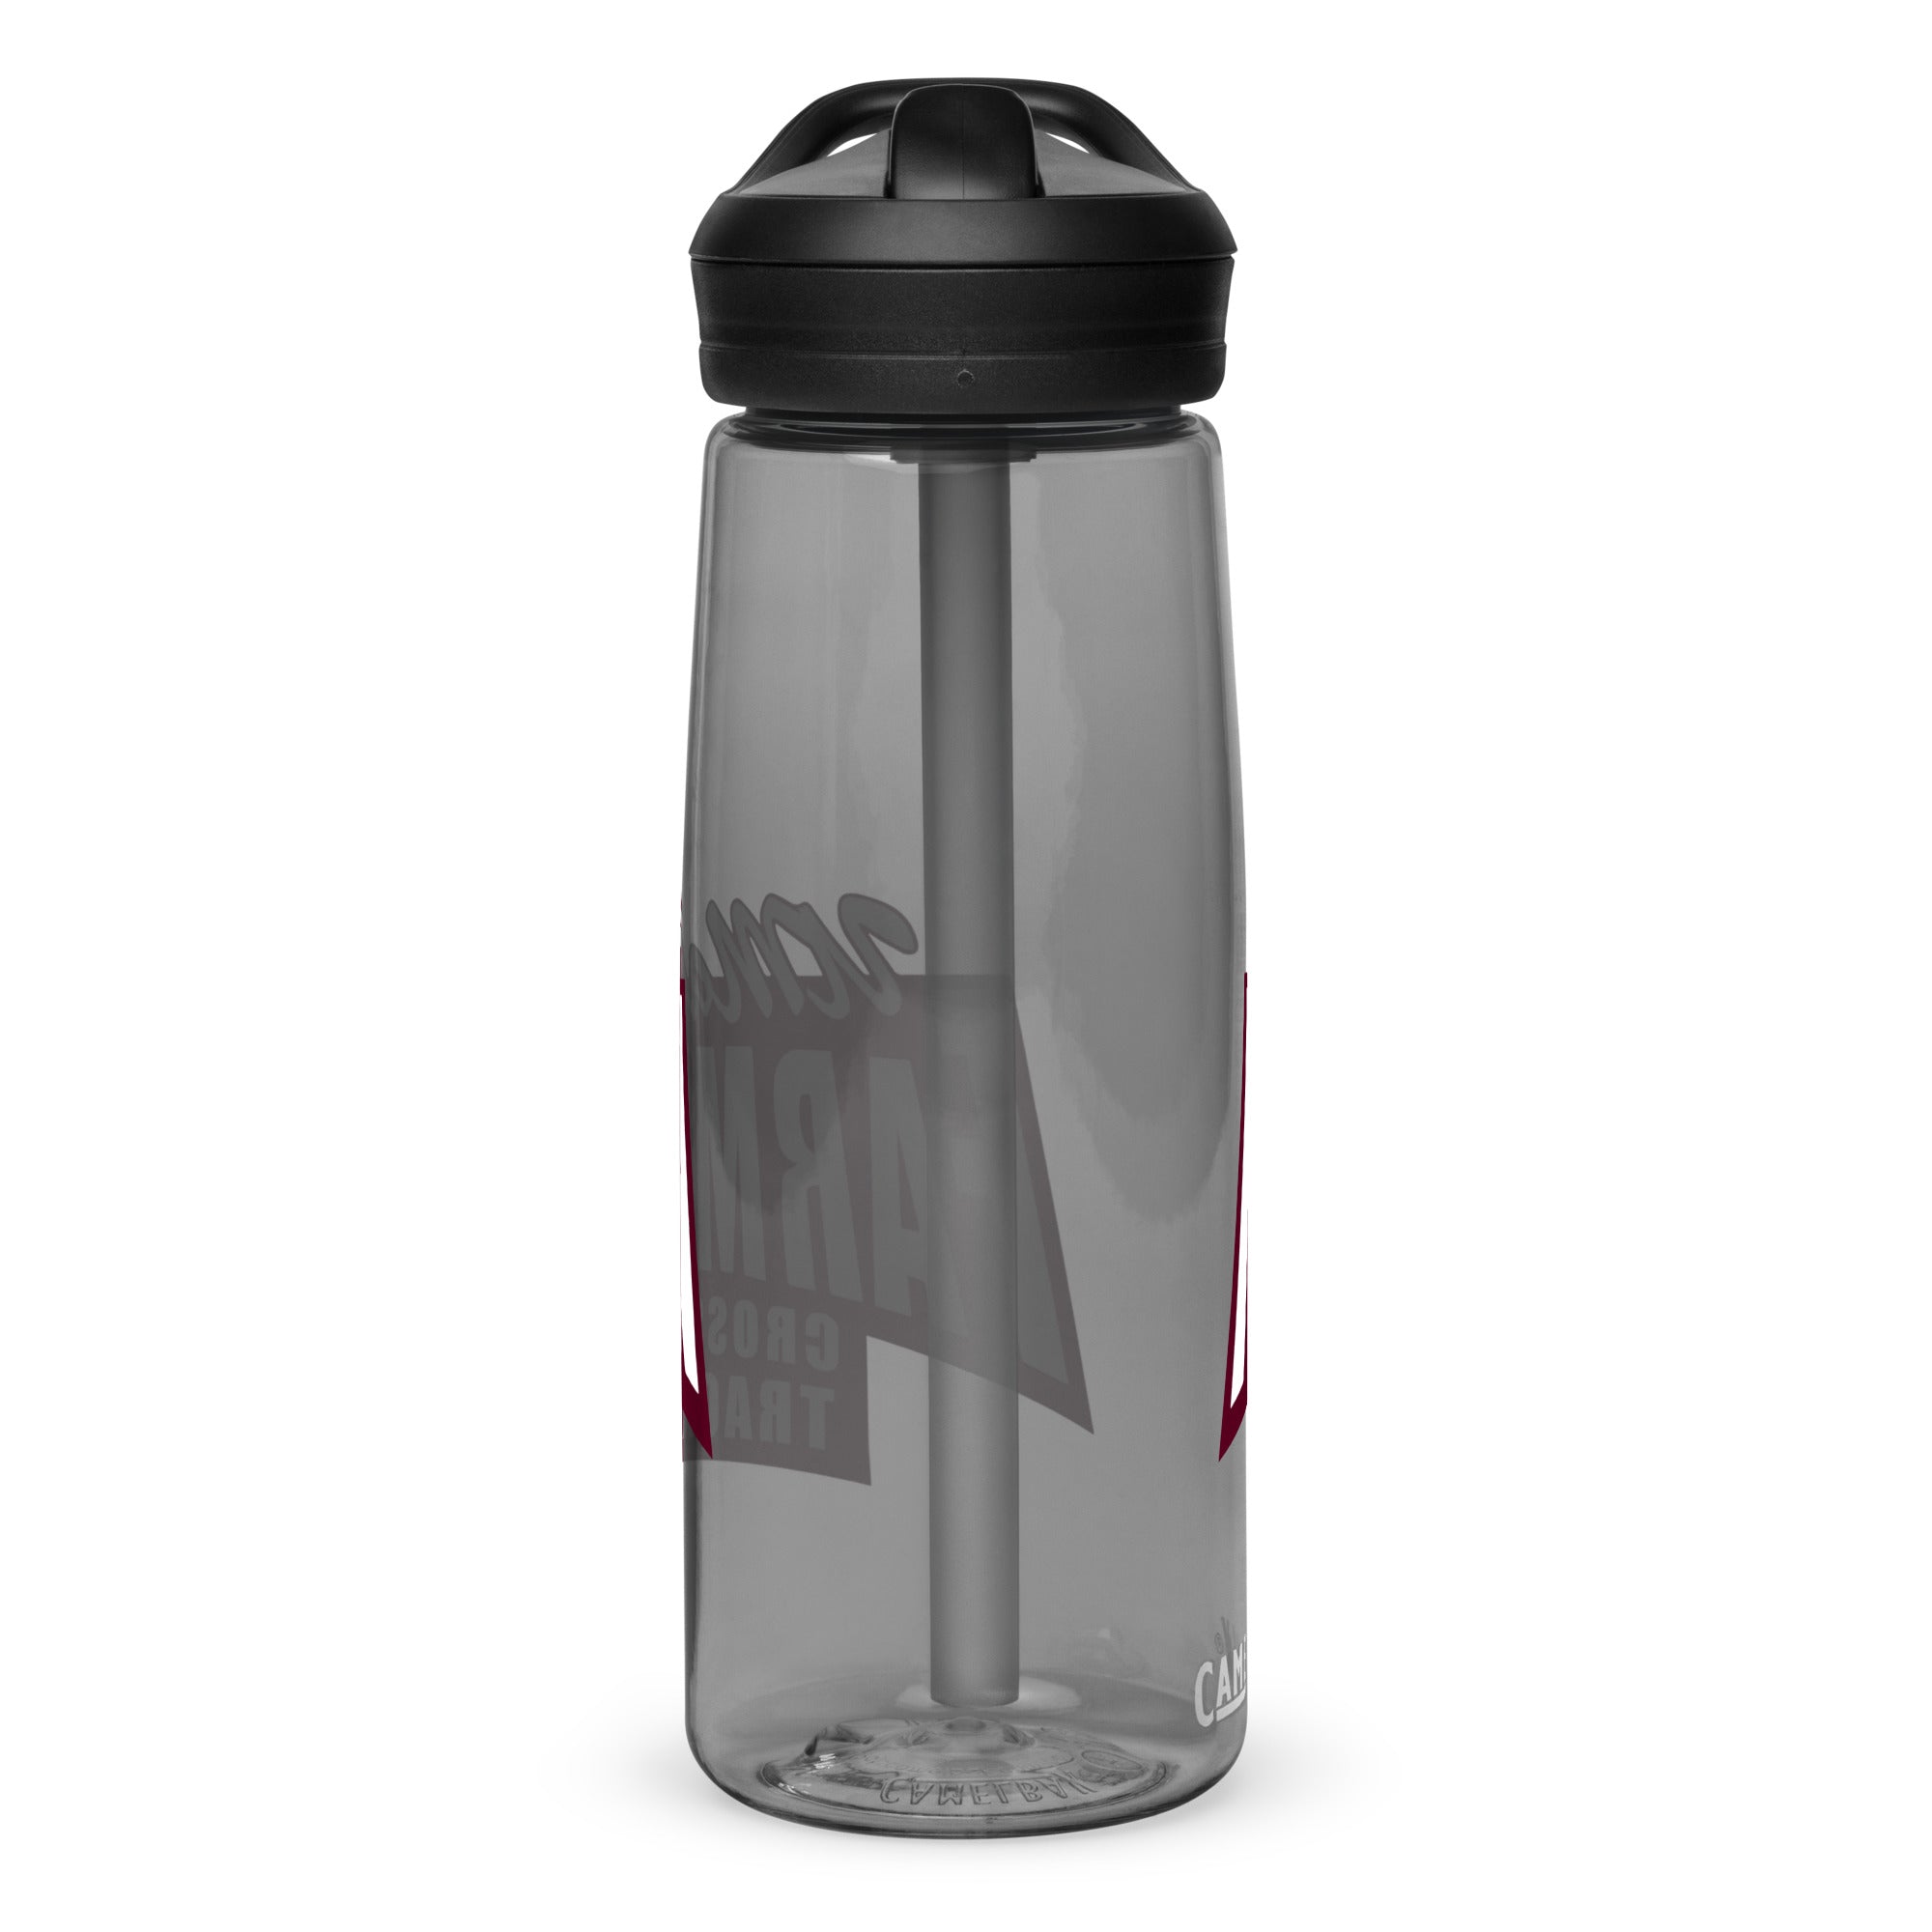 UMF XC Sports water bottle